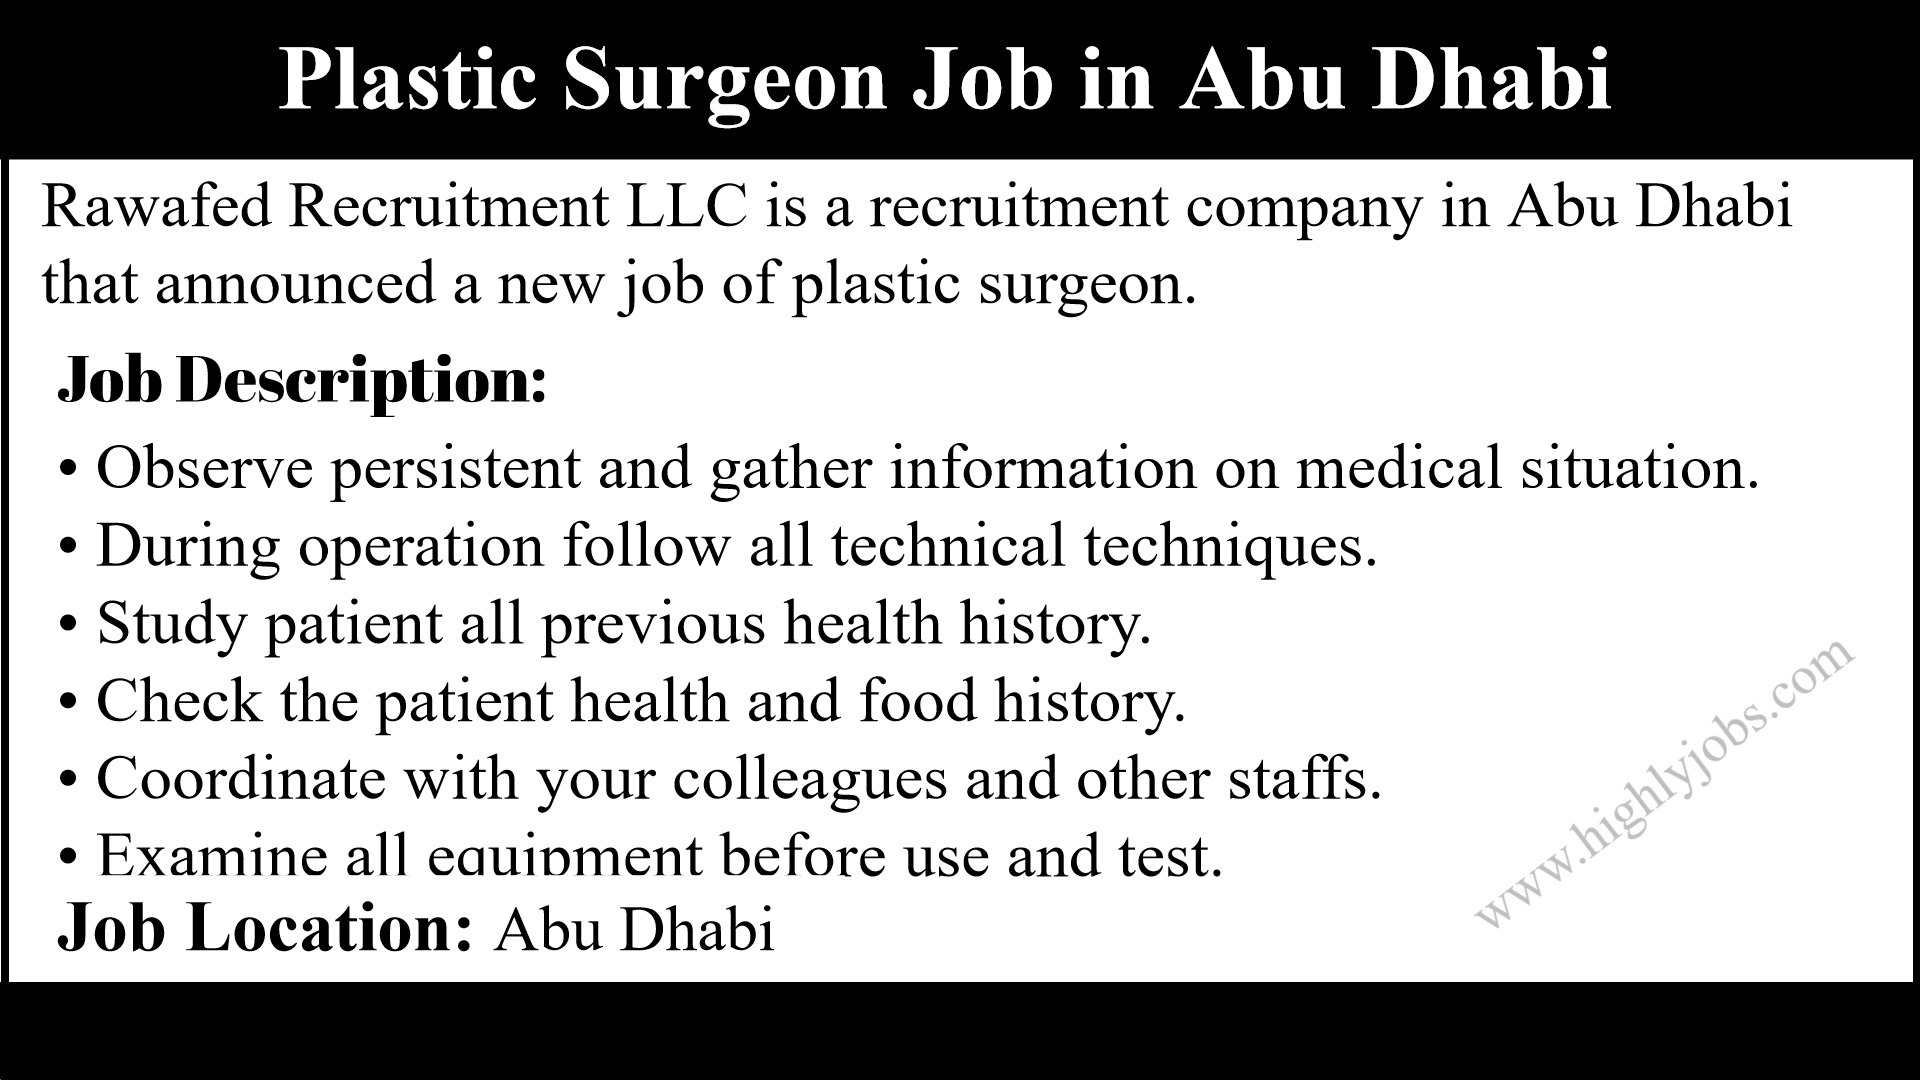 Plastic Surgeon Job in Abu Dhabi